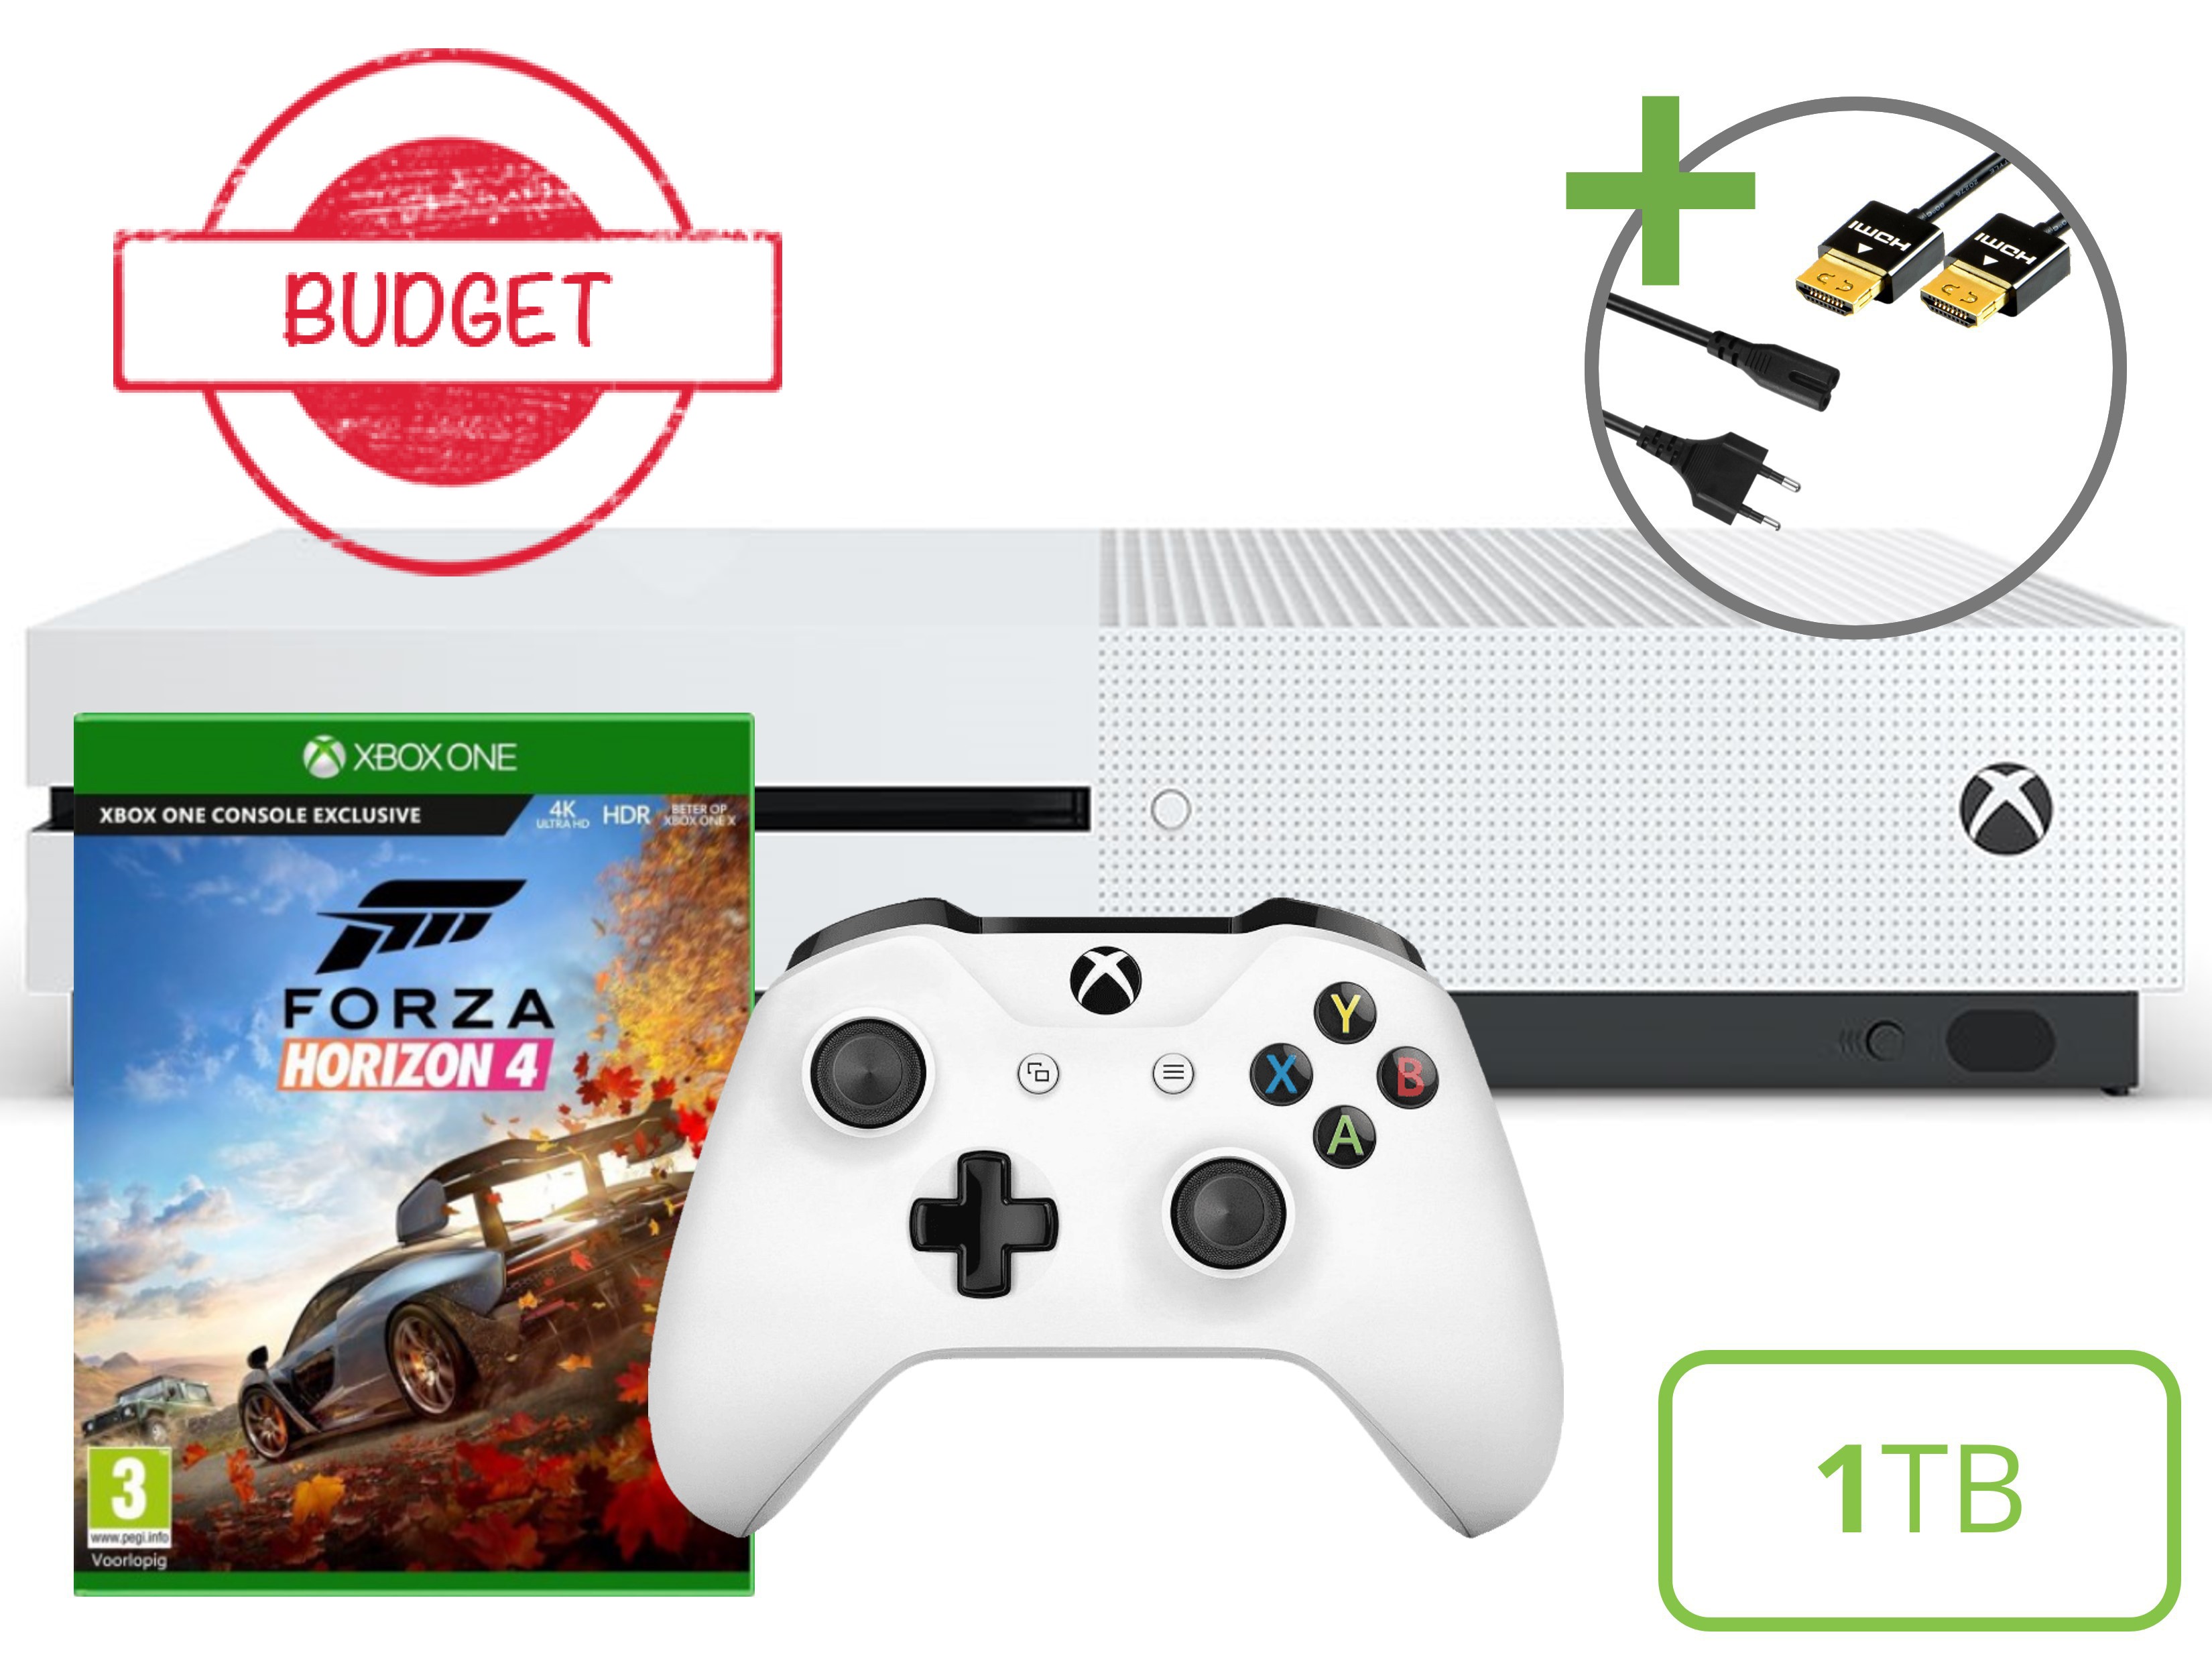 Microsoft Xbox One S Starter Pack - 1TB Forza Horizon 4  Edition - Budget - Xbox One Hardware